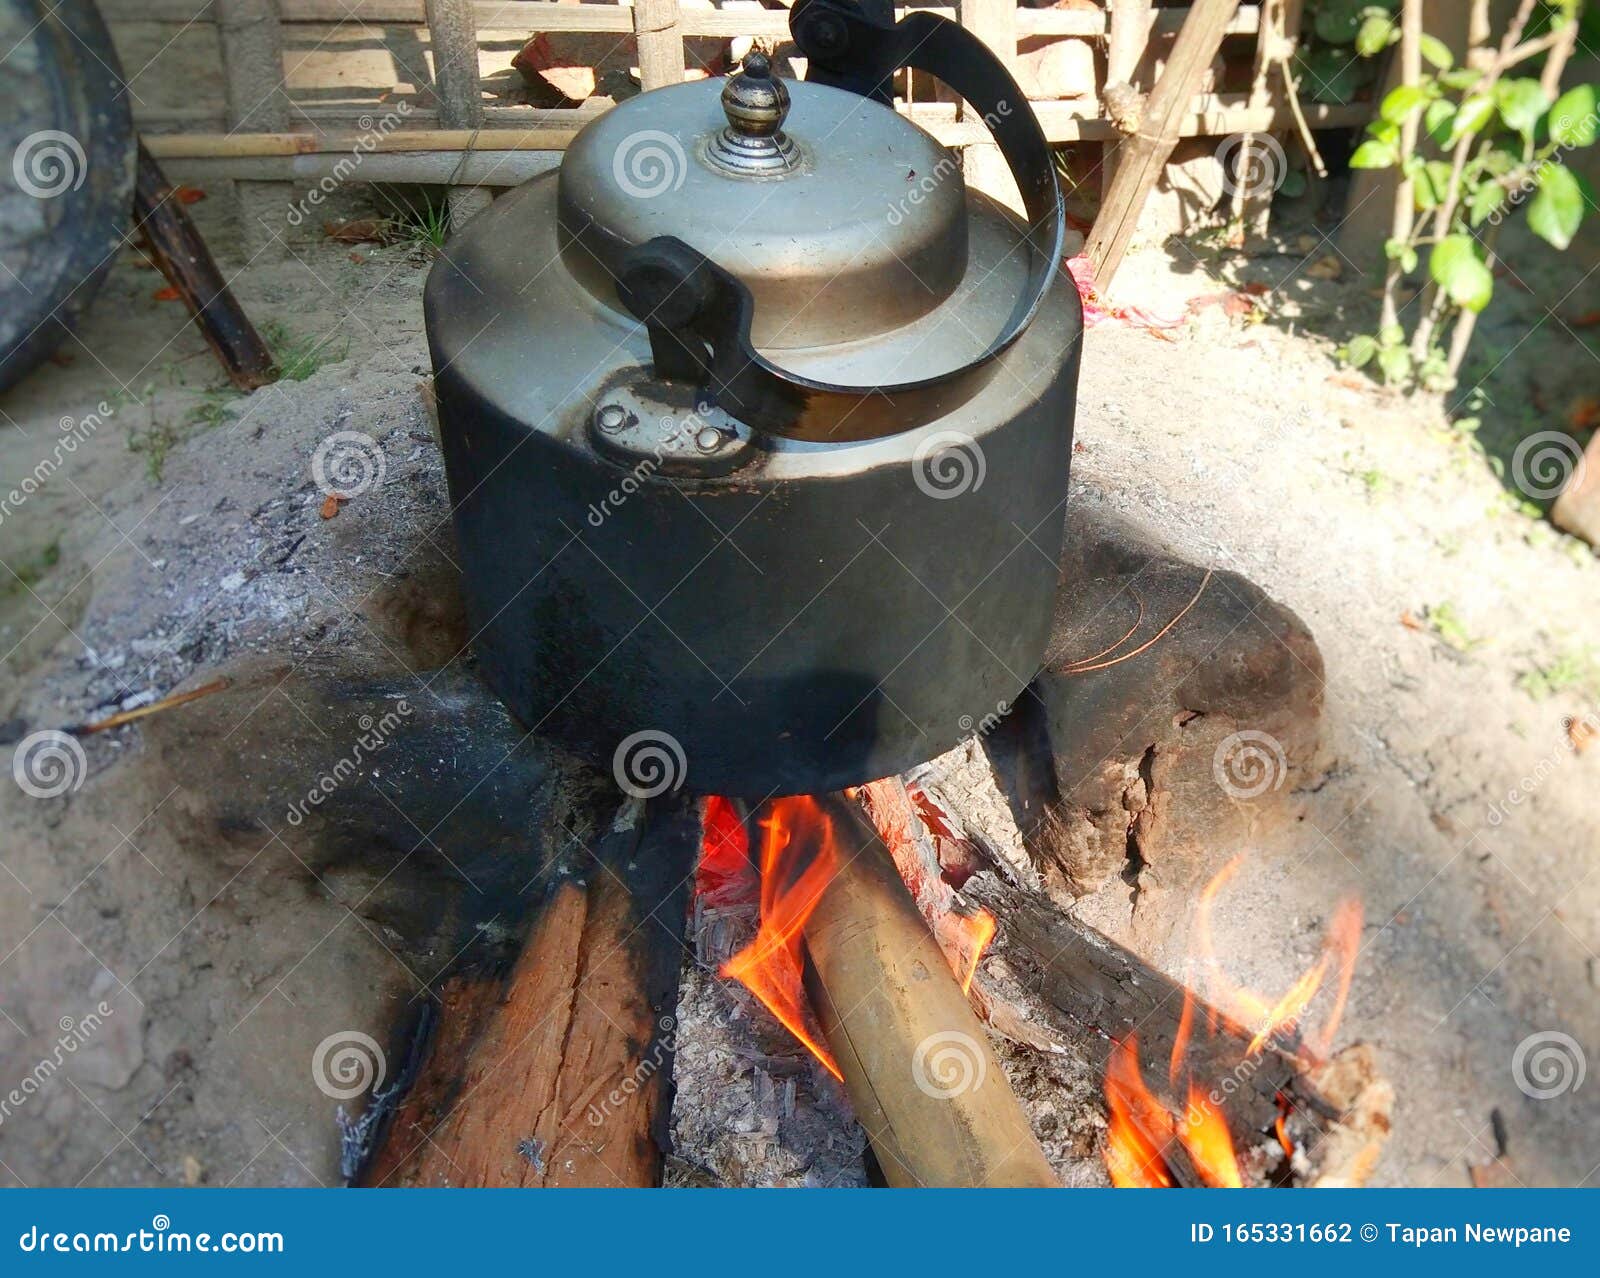 https://thumbs.dreamstime.com/z/earthen-stove-burning-firewood-indian-rural-village-cooking-ways-traditional-way-cooking-rural-india-village-earthen-165331662.jpg